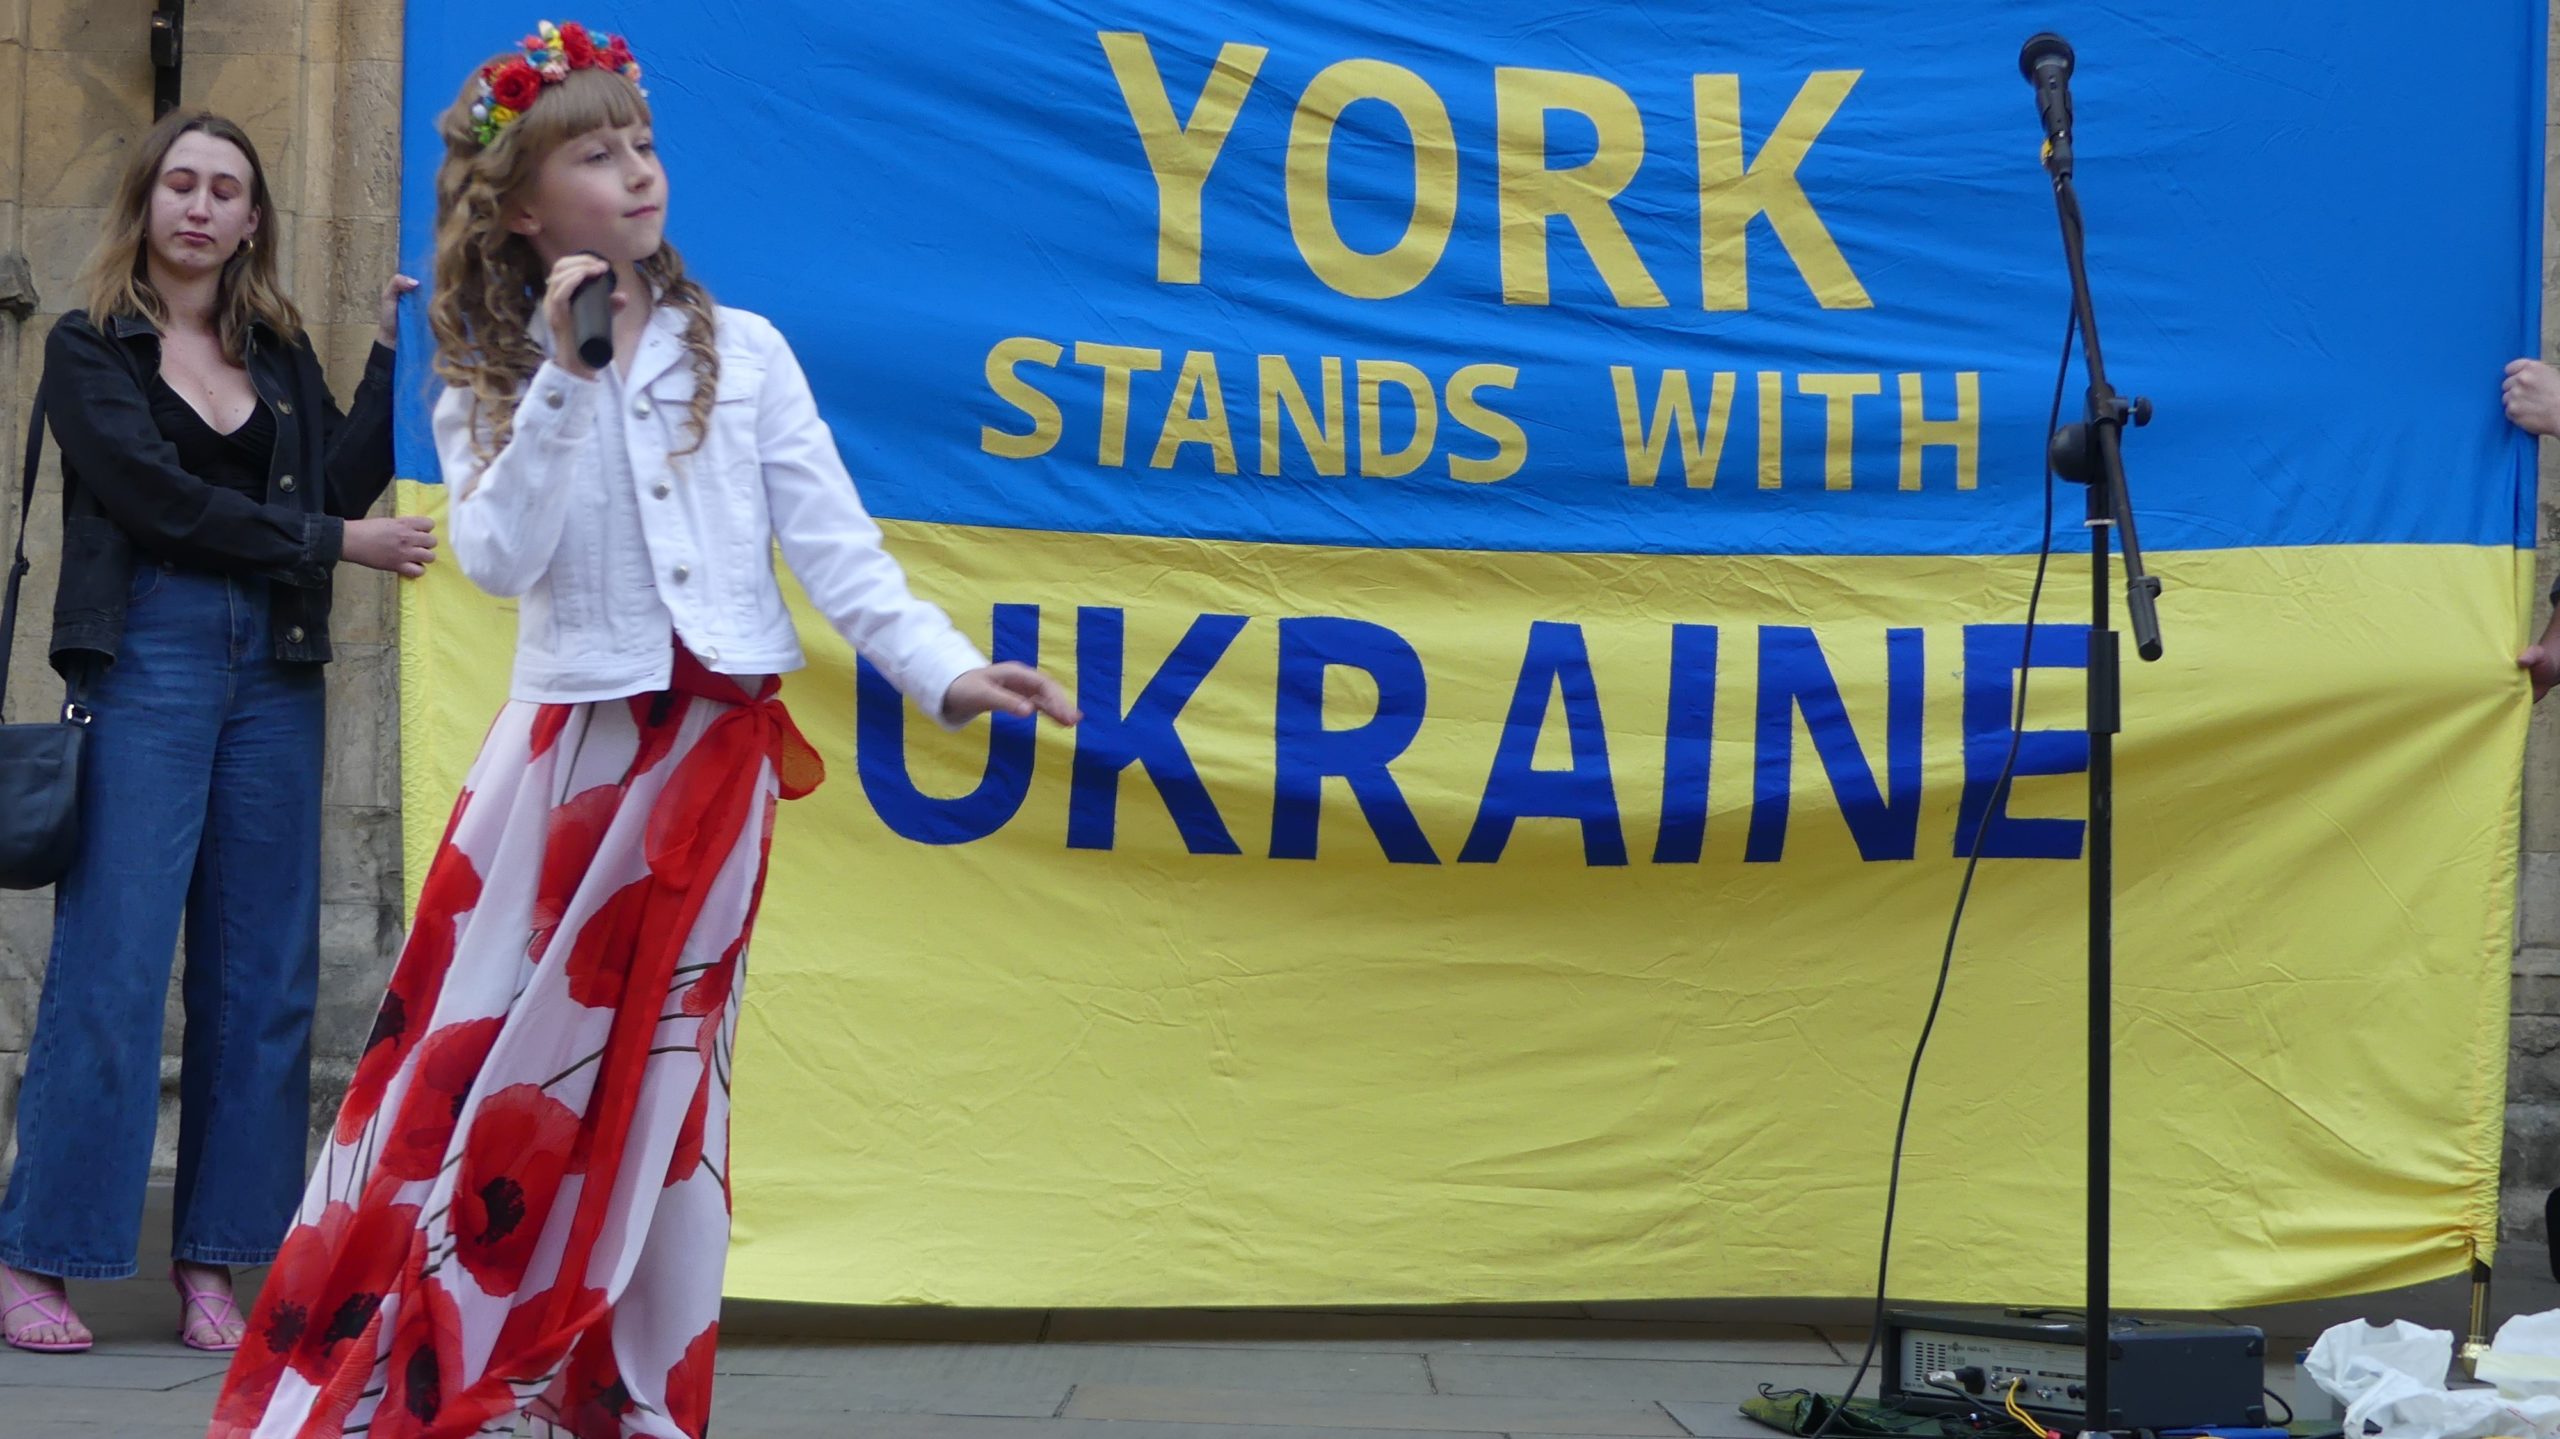 Yasenia, aged 9 singing at Ukraine Independence Day event outside York Minster